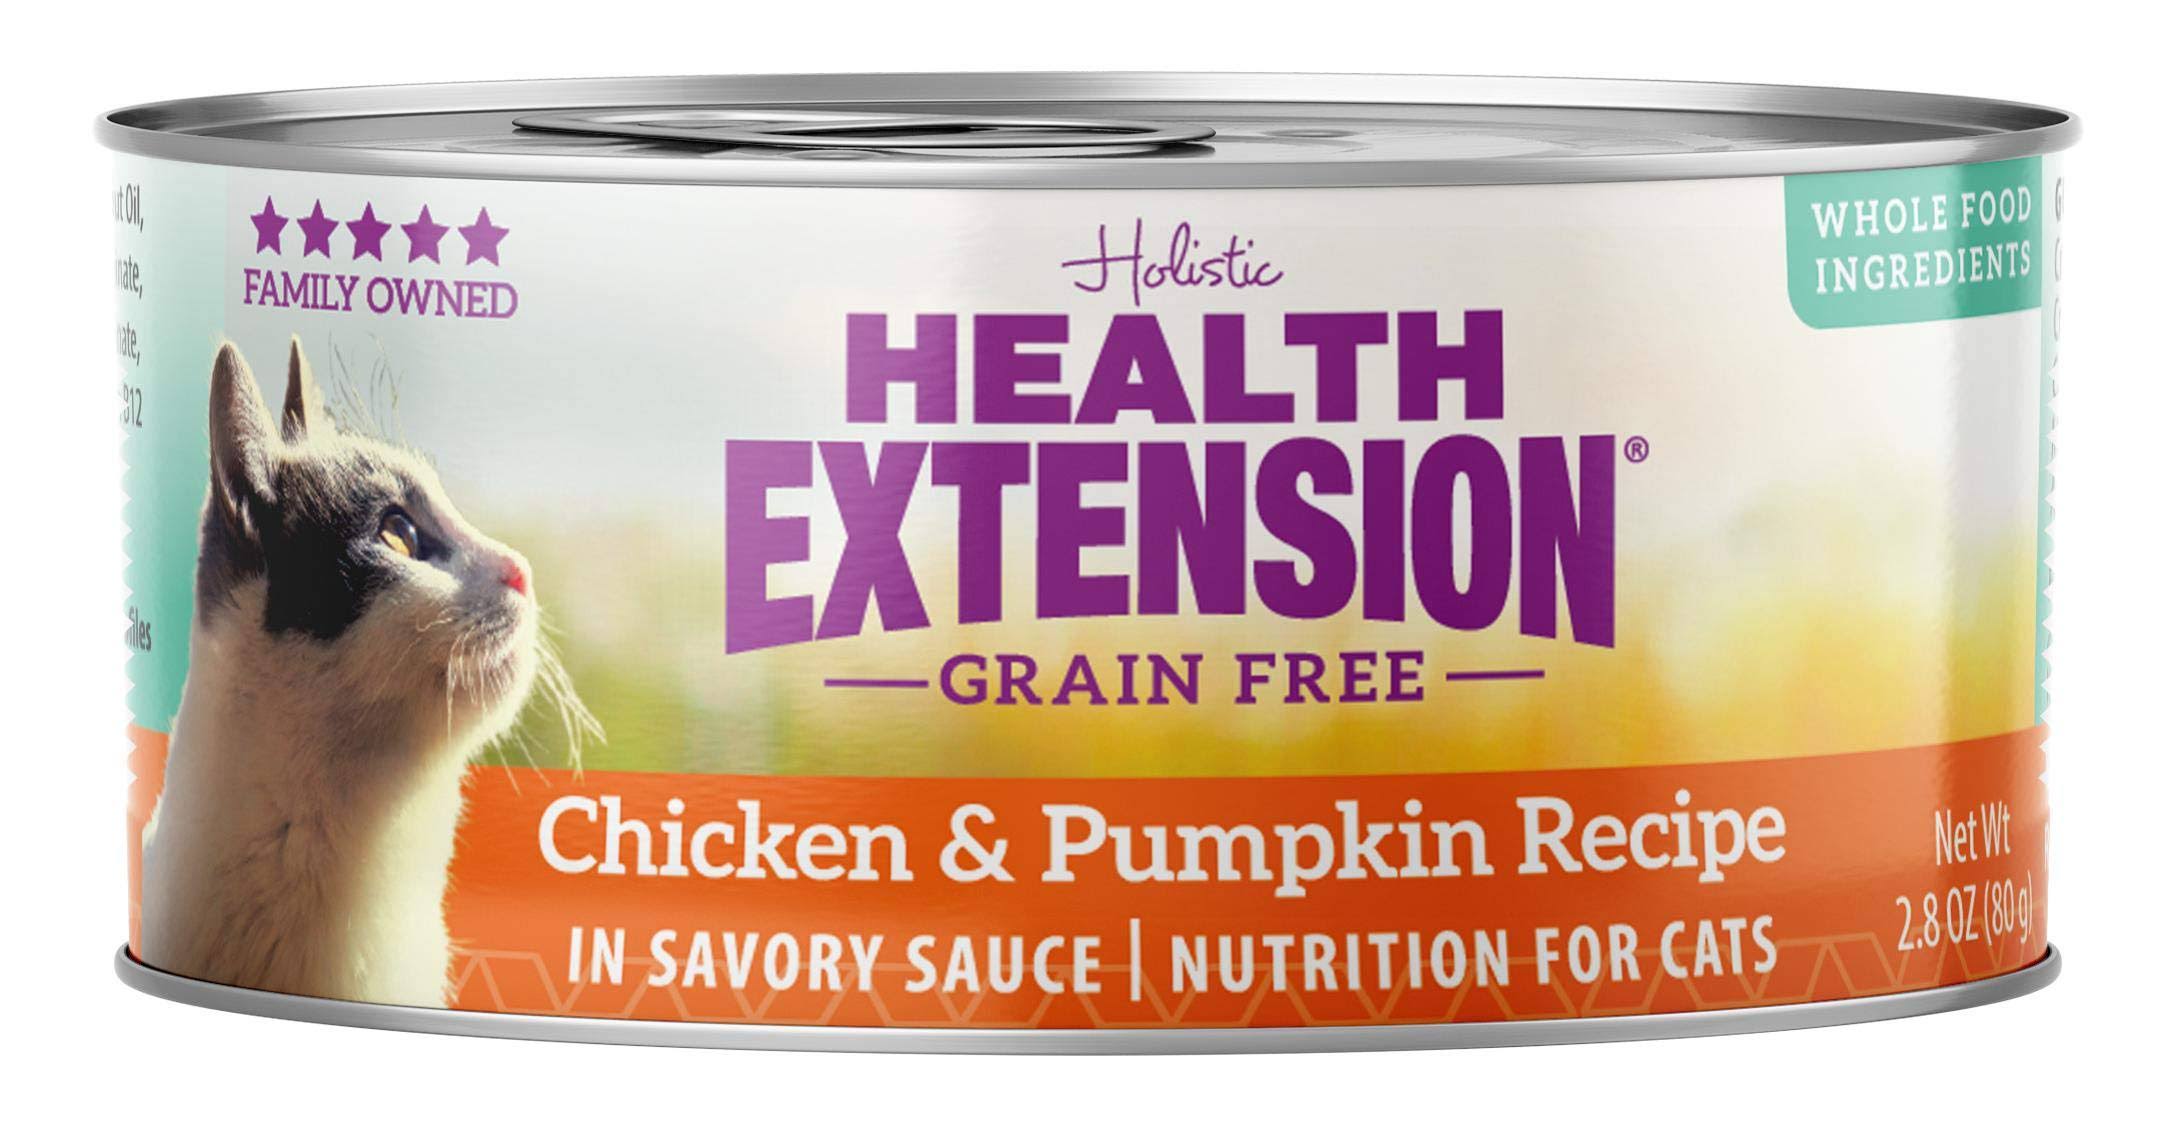 Health Extension Cat Food - Grain Free Chicken & Pumpkin - 2.8 oz